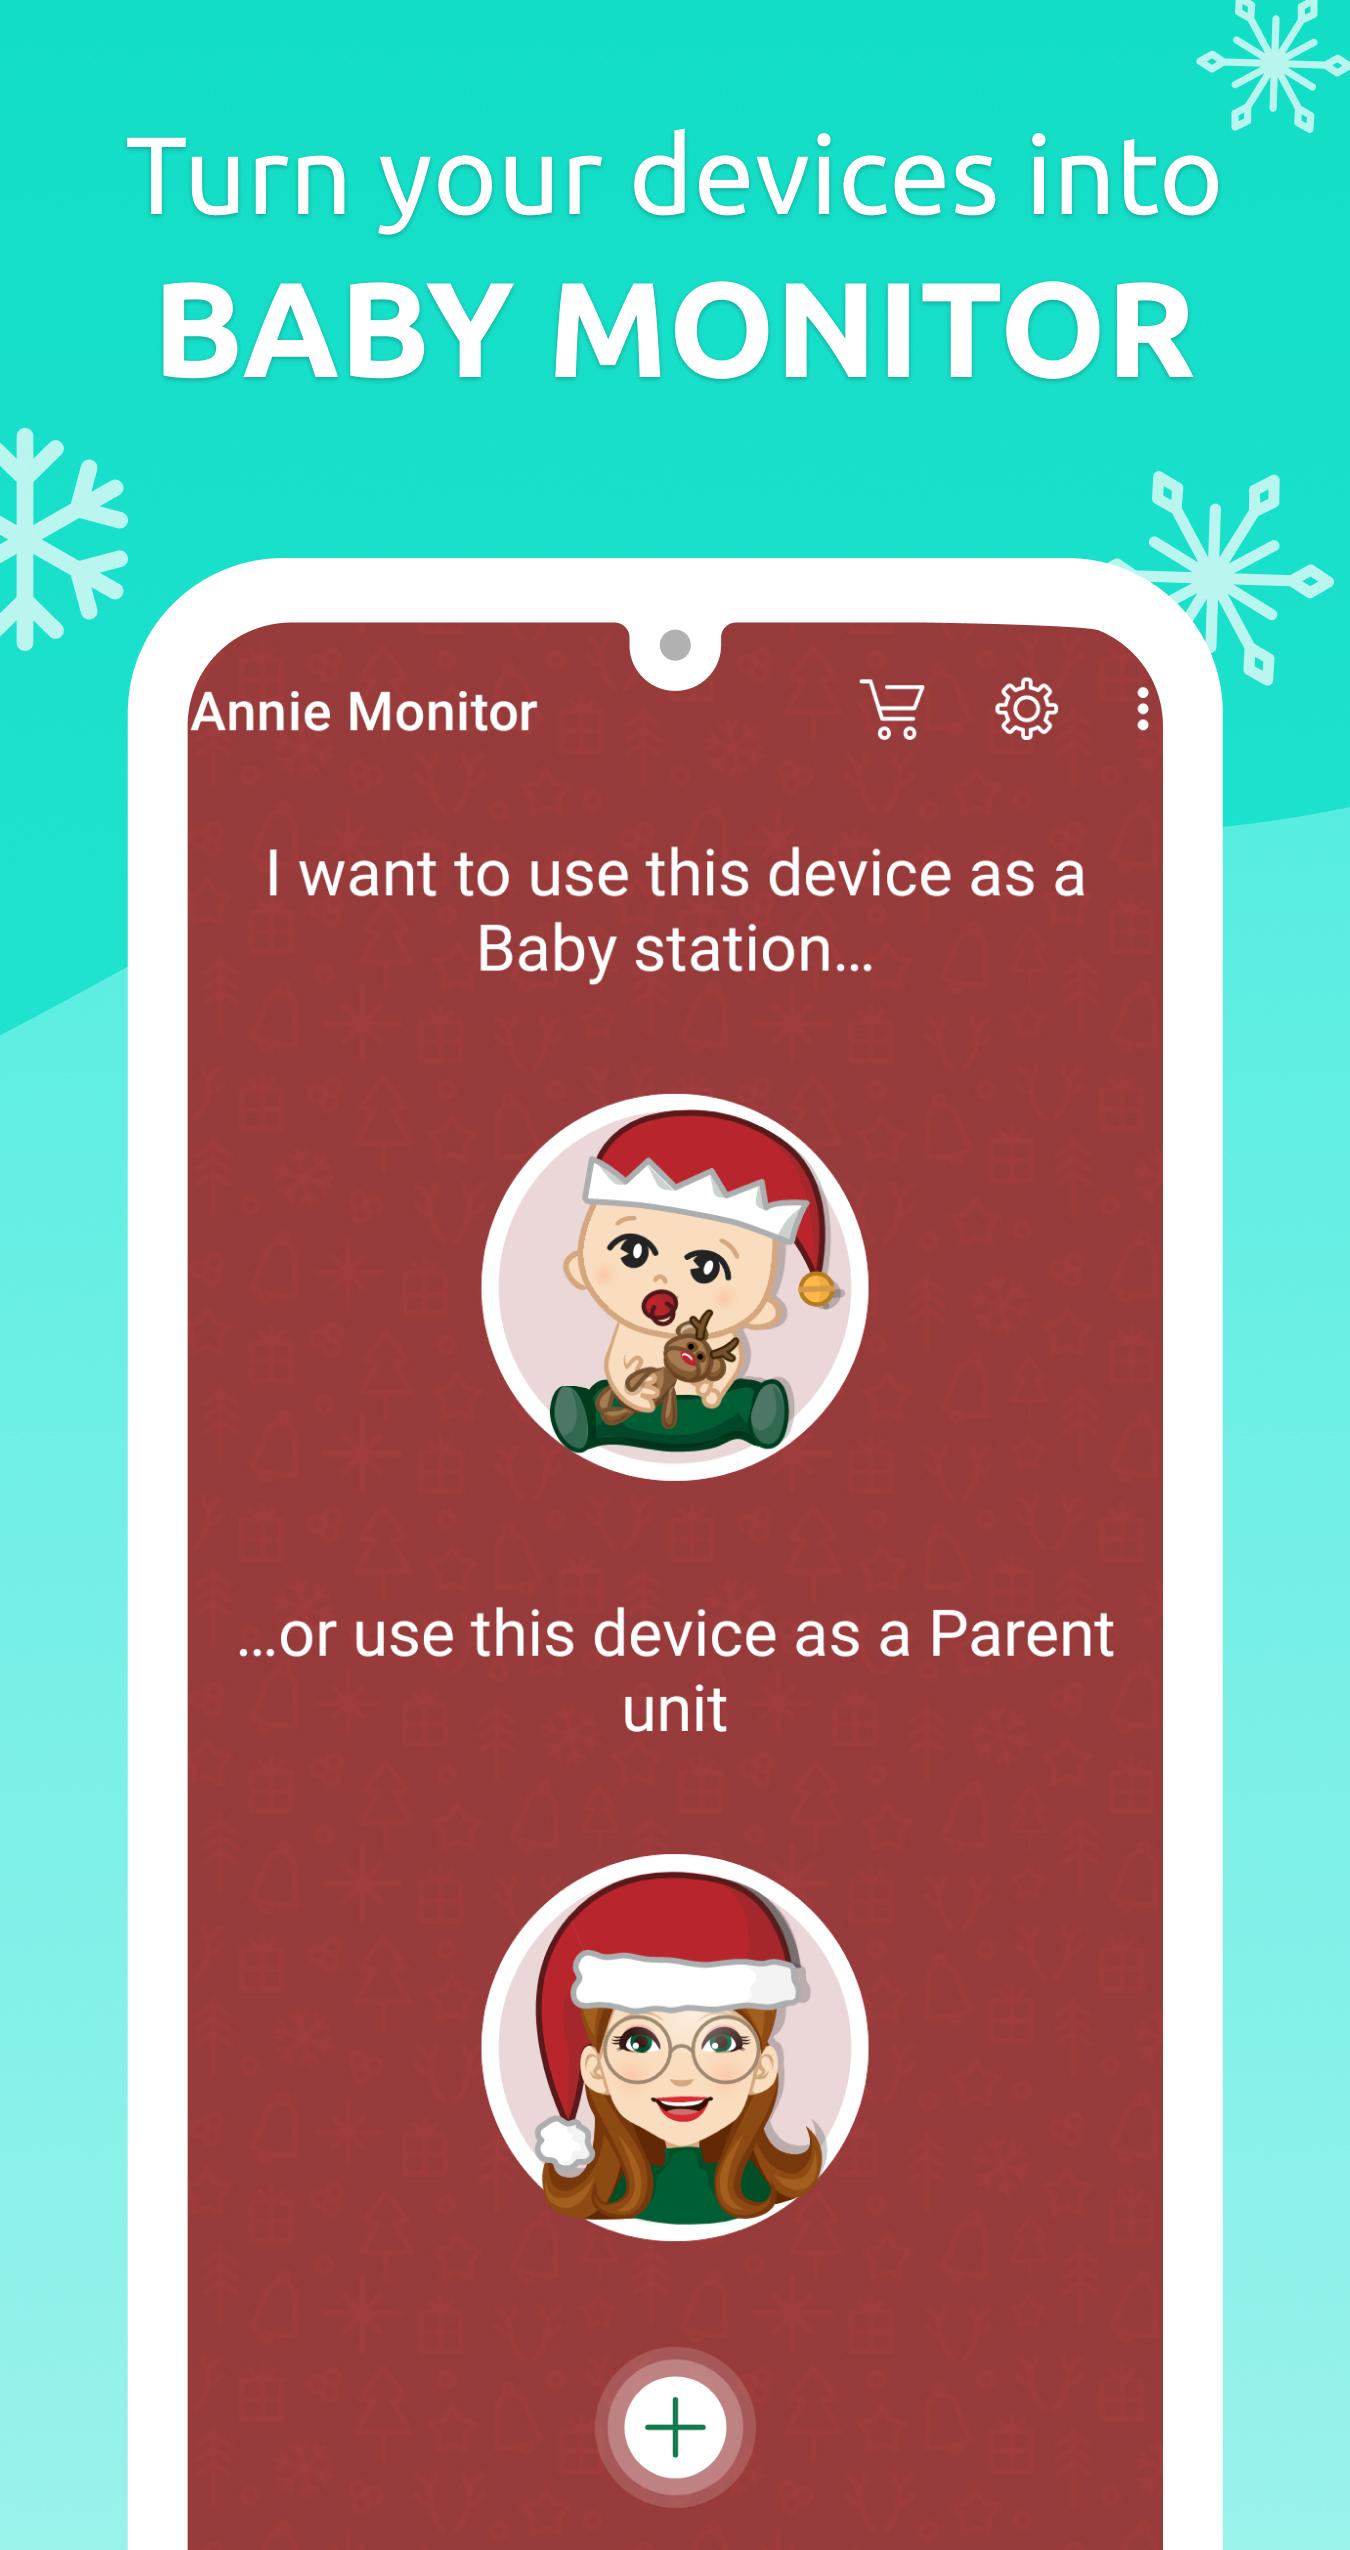 Annie Baby Monitor: Video Audio Nanny Cam 3G WiFi 3.22.0+master.133ace106 Screenshot 4